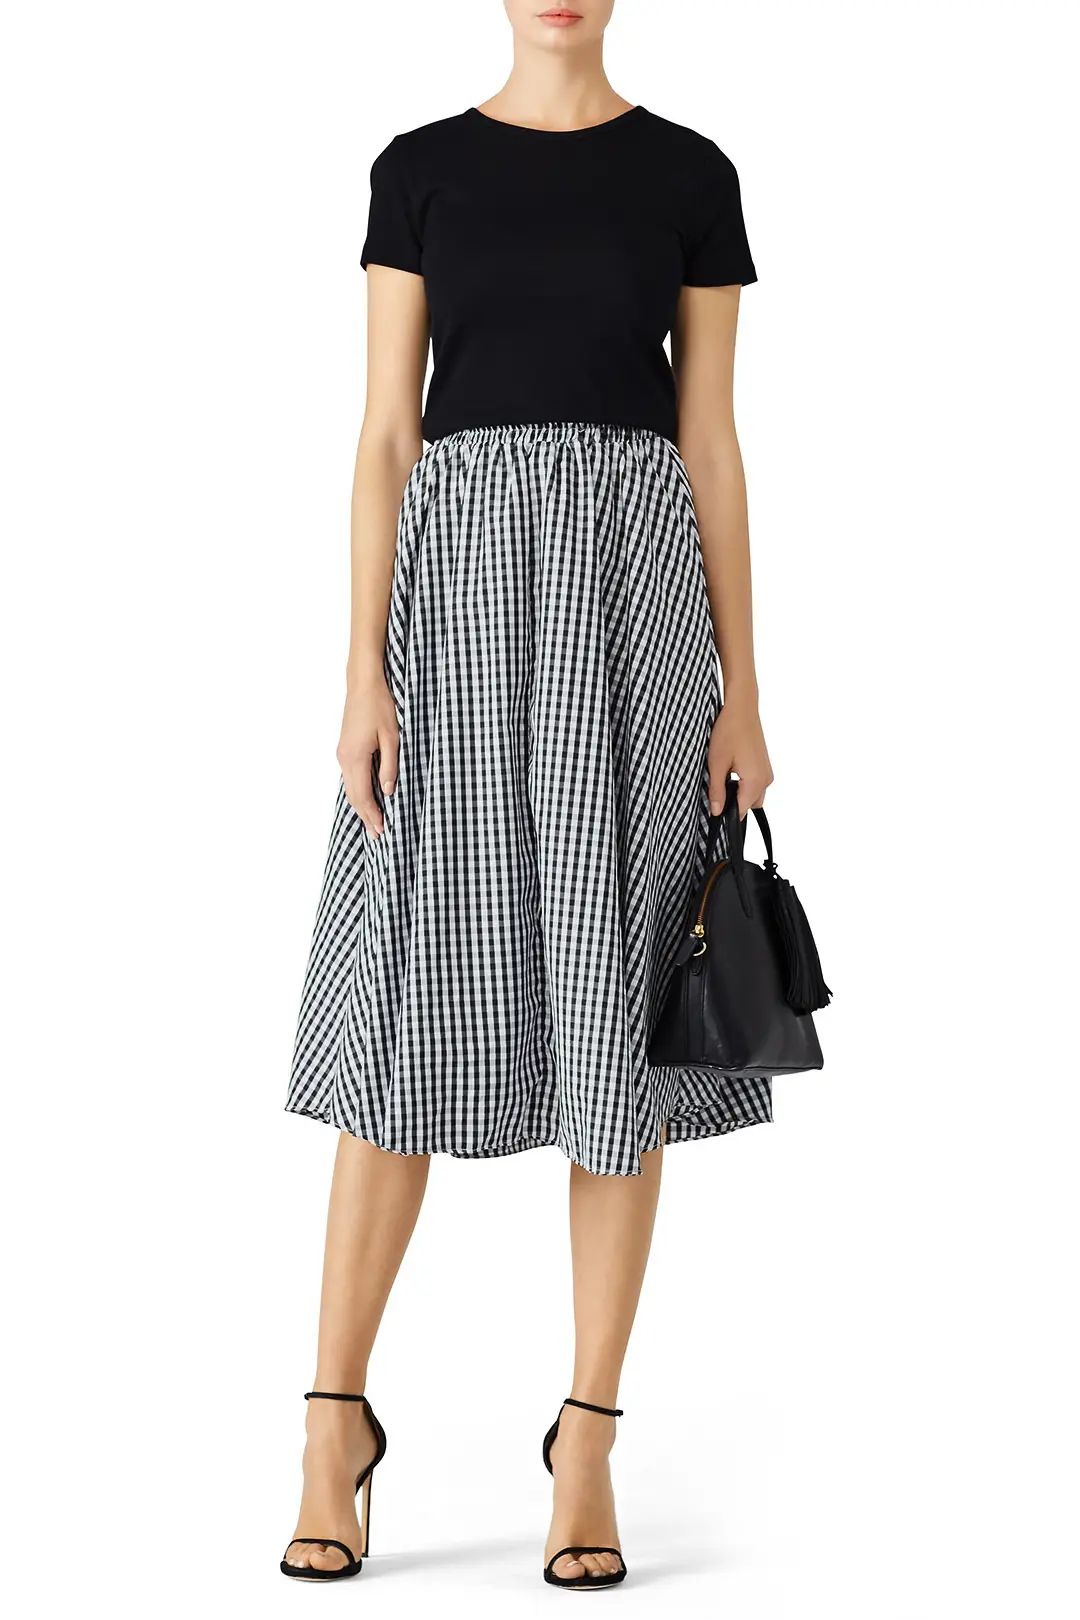 StyleKeepers Gingham Midi Skirt | Rent The Runway